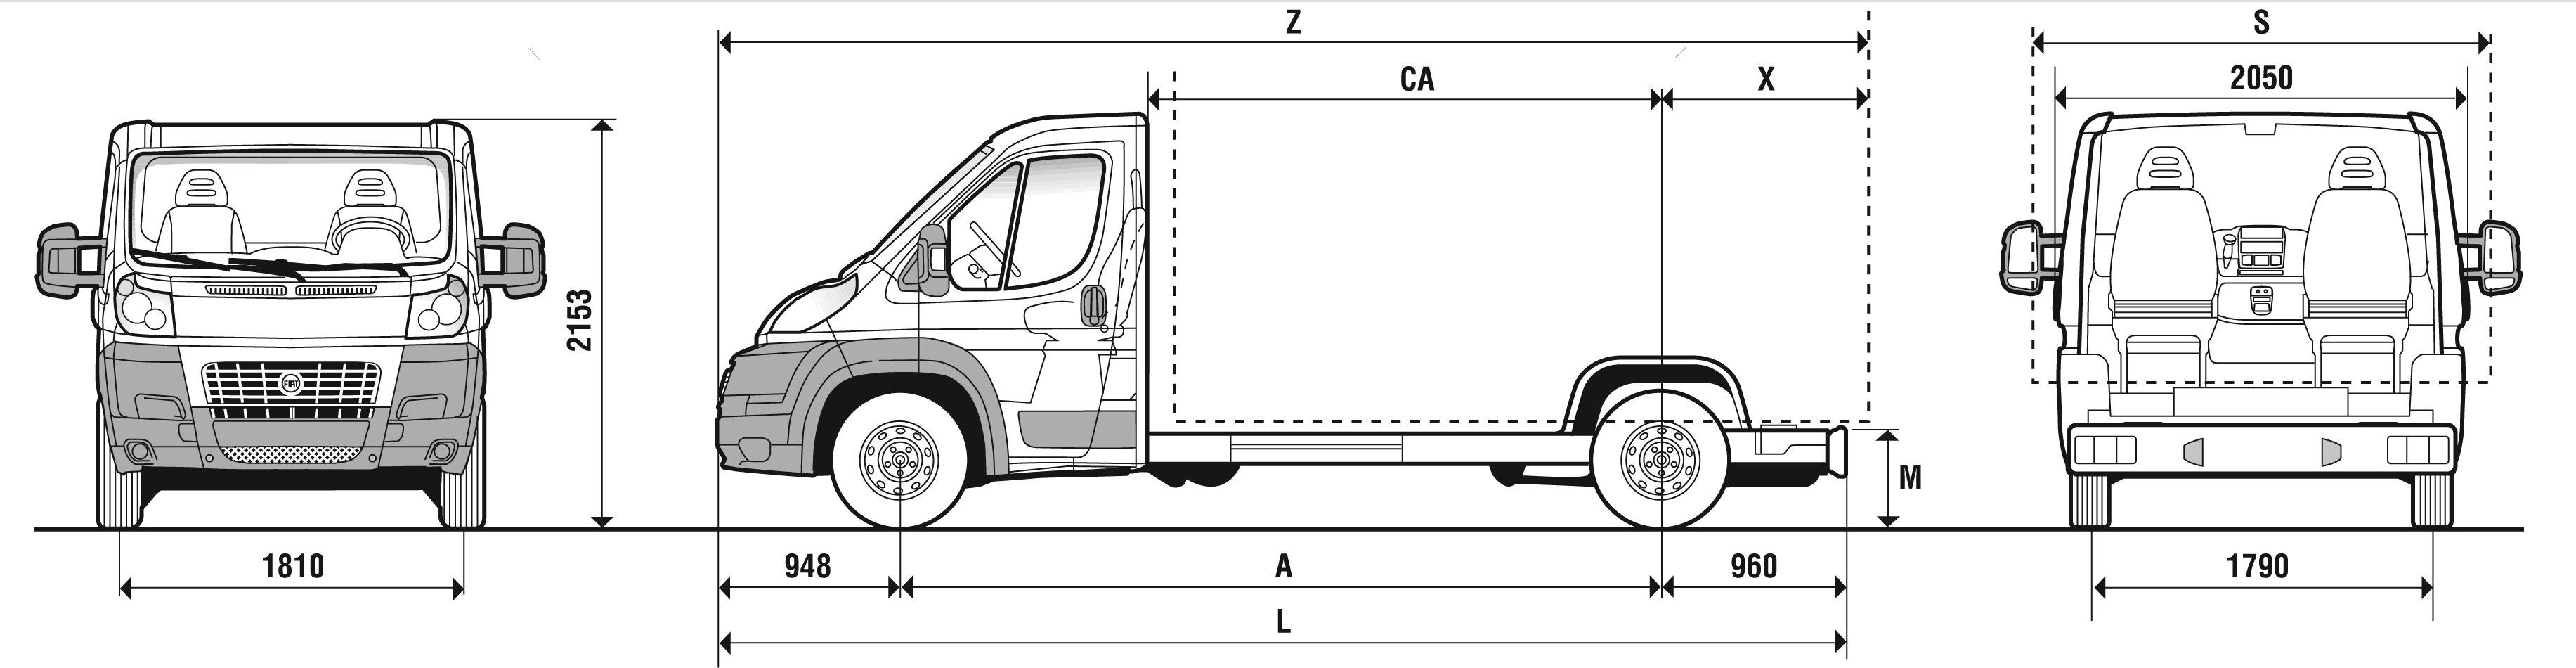 2007 Fiat Ducato Maxi Platform Heavy Truck blueprints free - Outlines